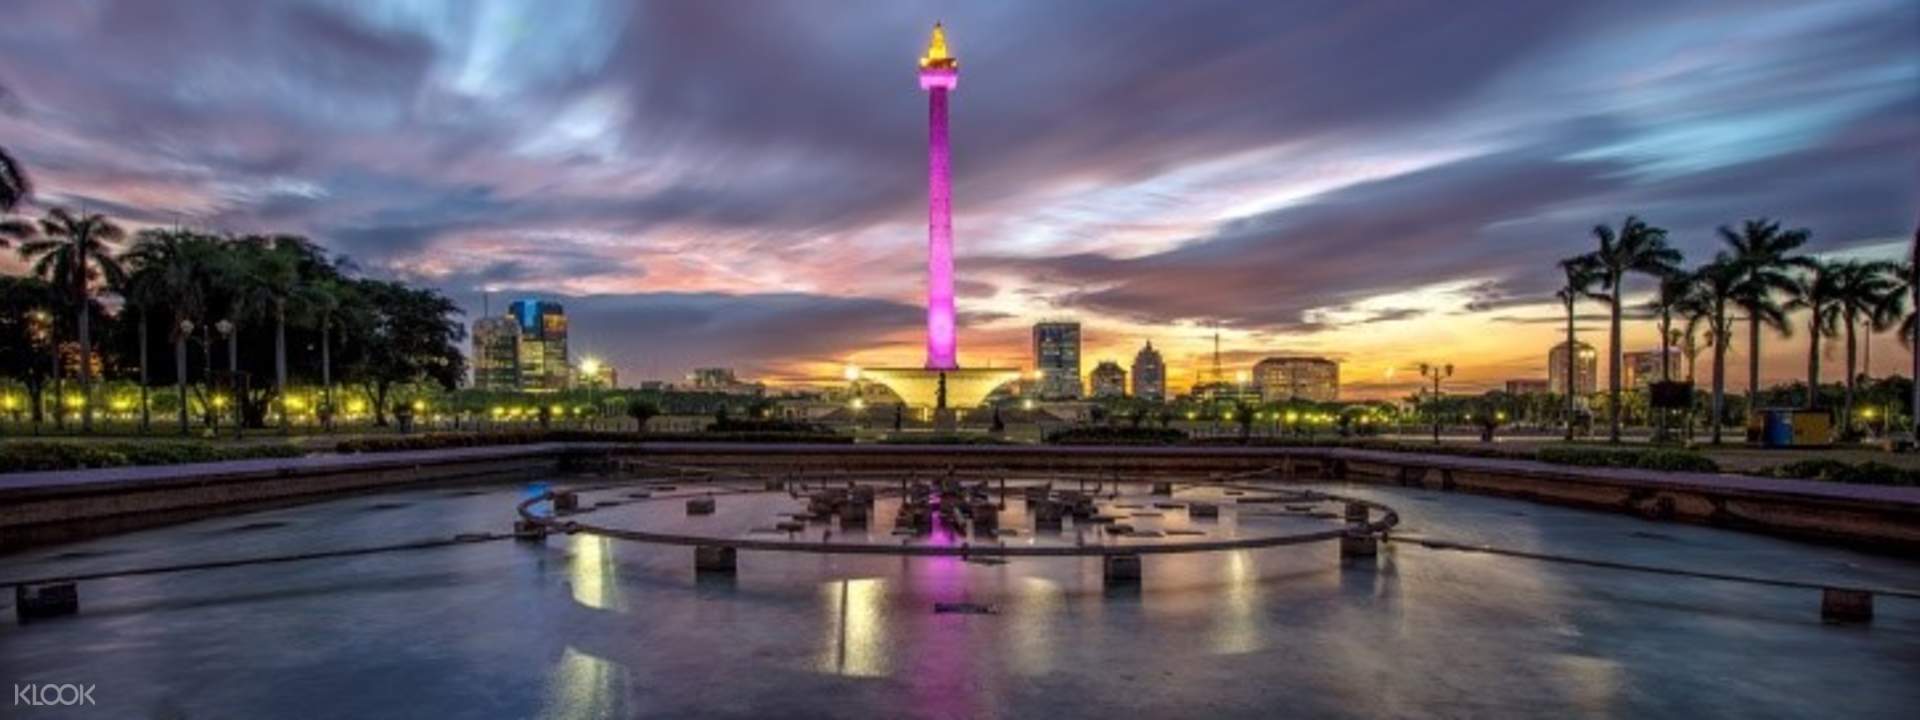 Jakarta Landmarks Tour in Indonesia - Klook